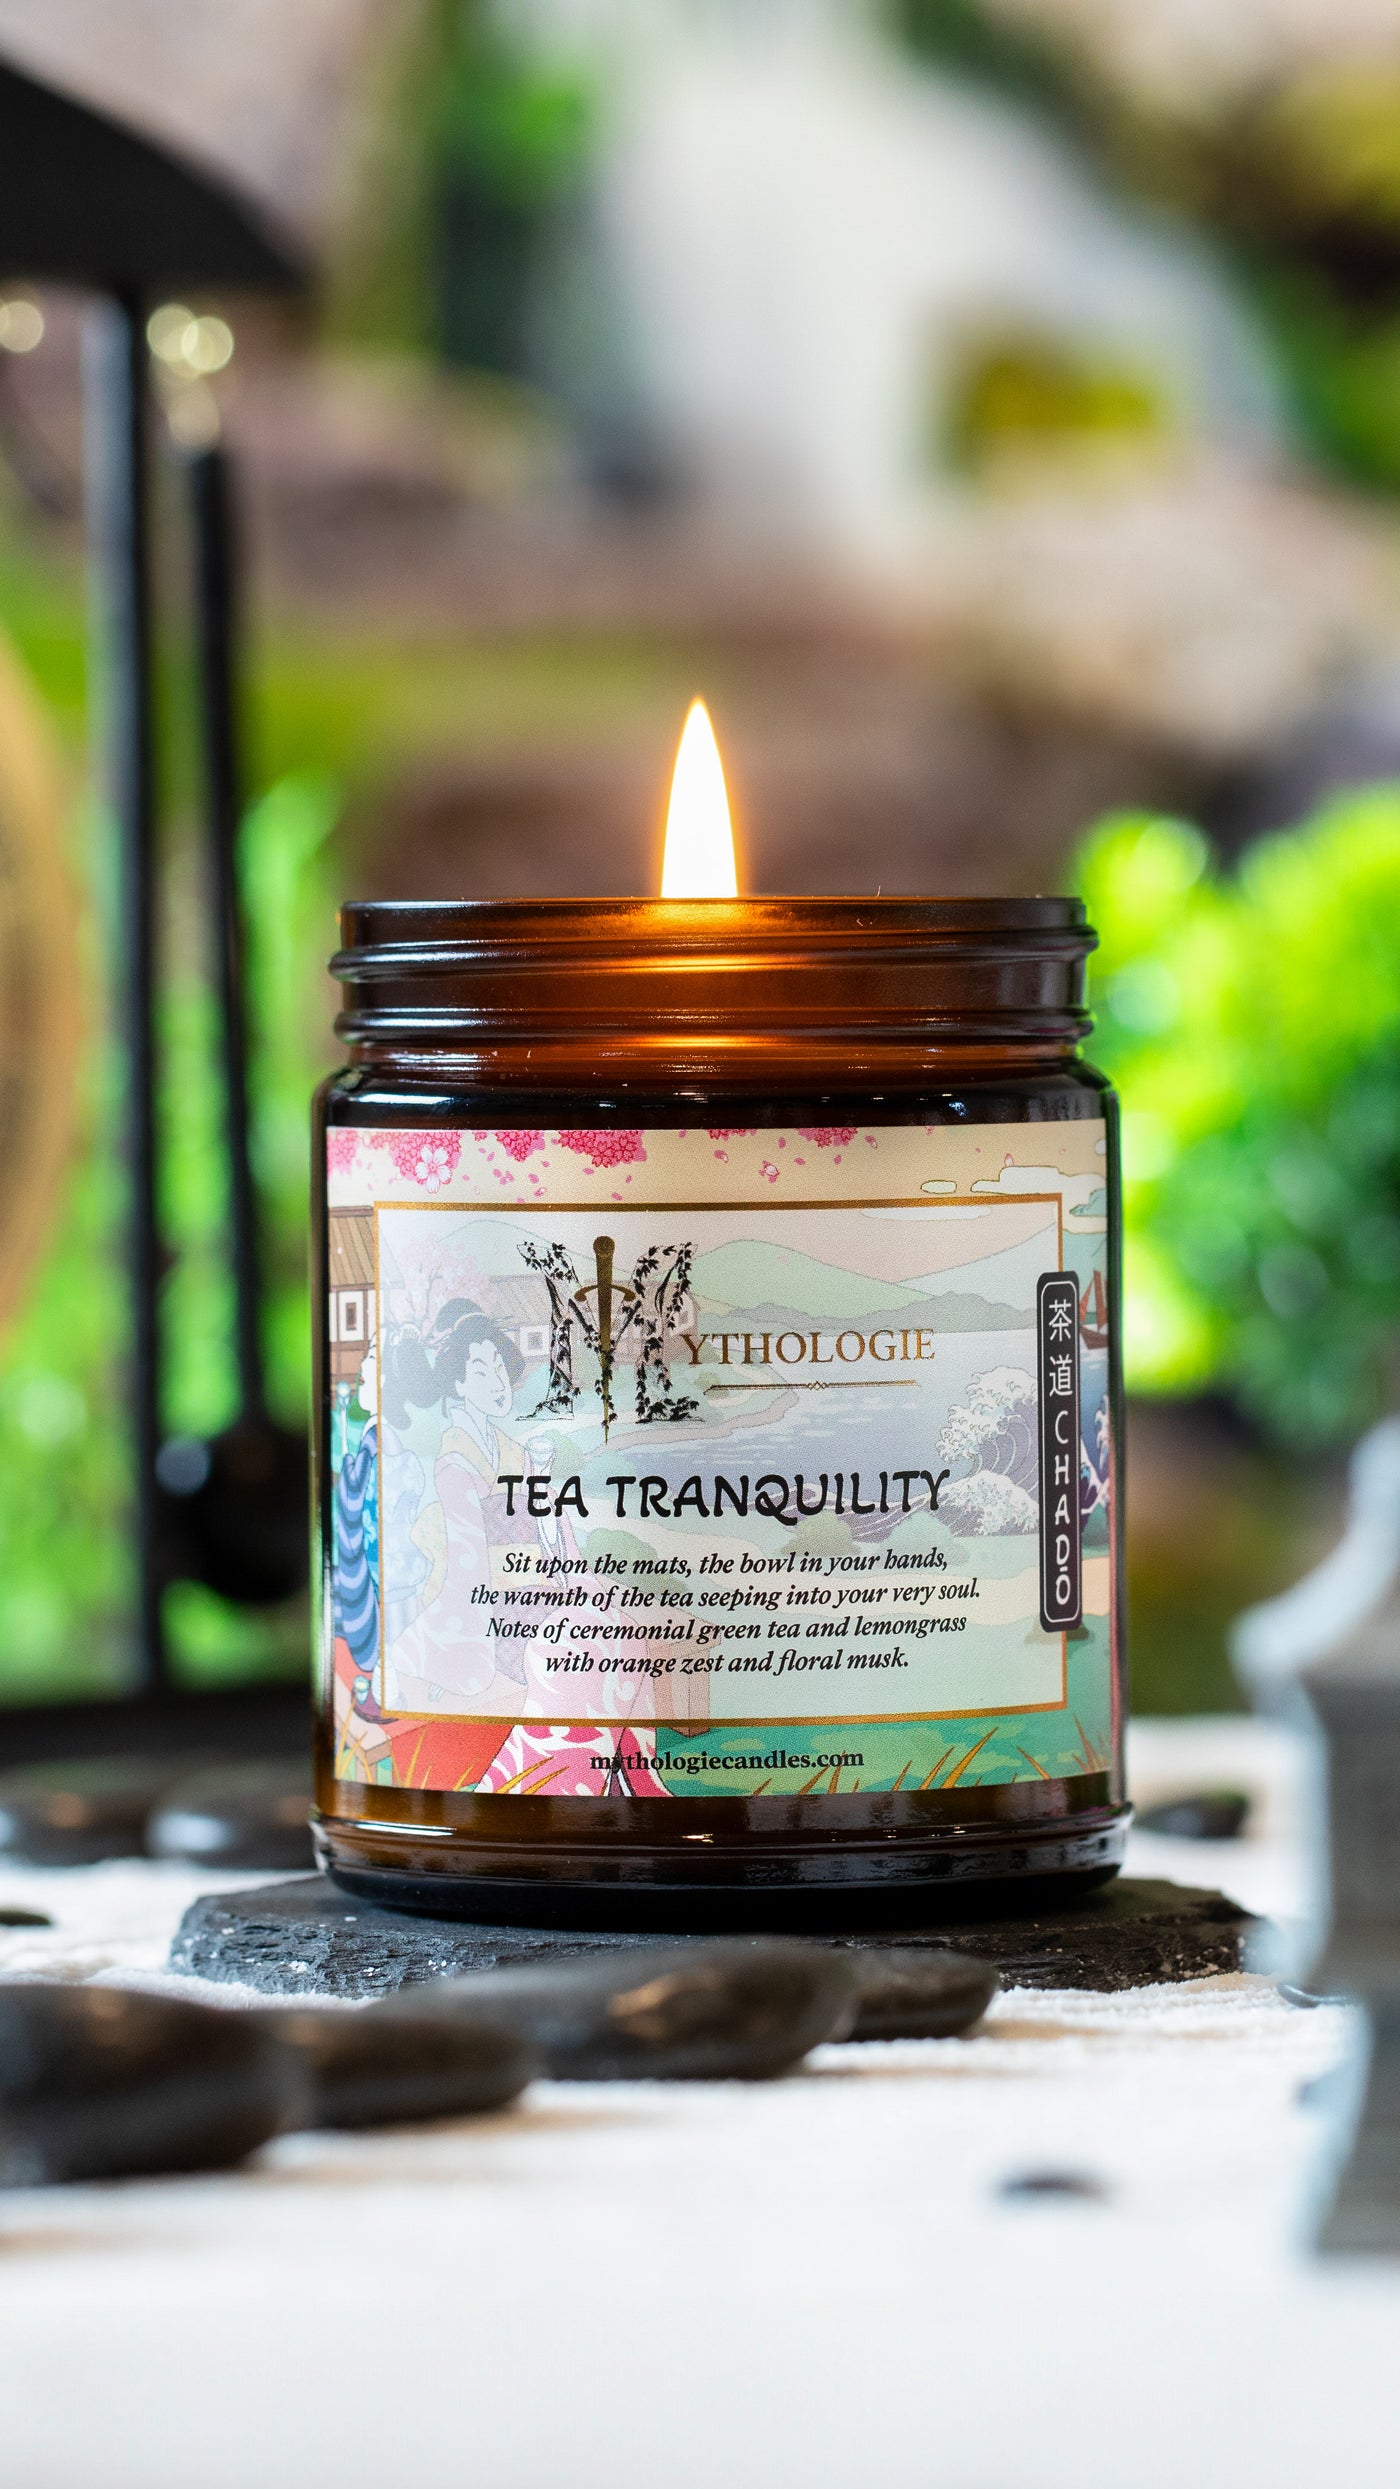 Chadō (茶道) "Tea Tranquility"